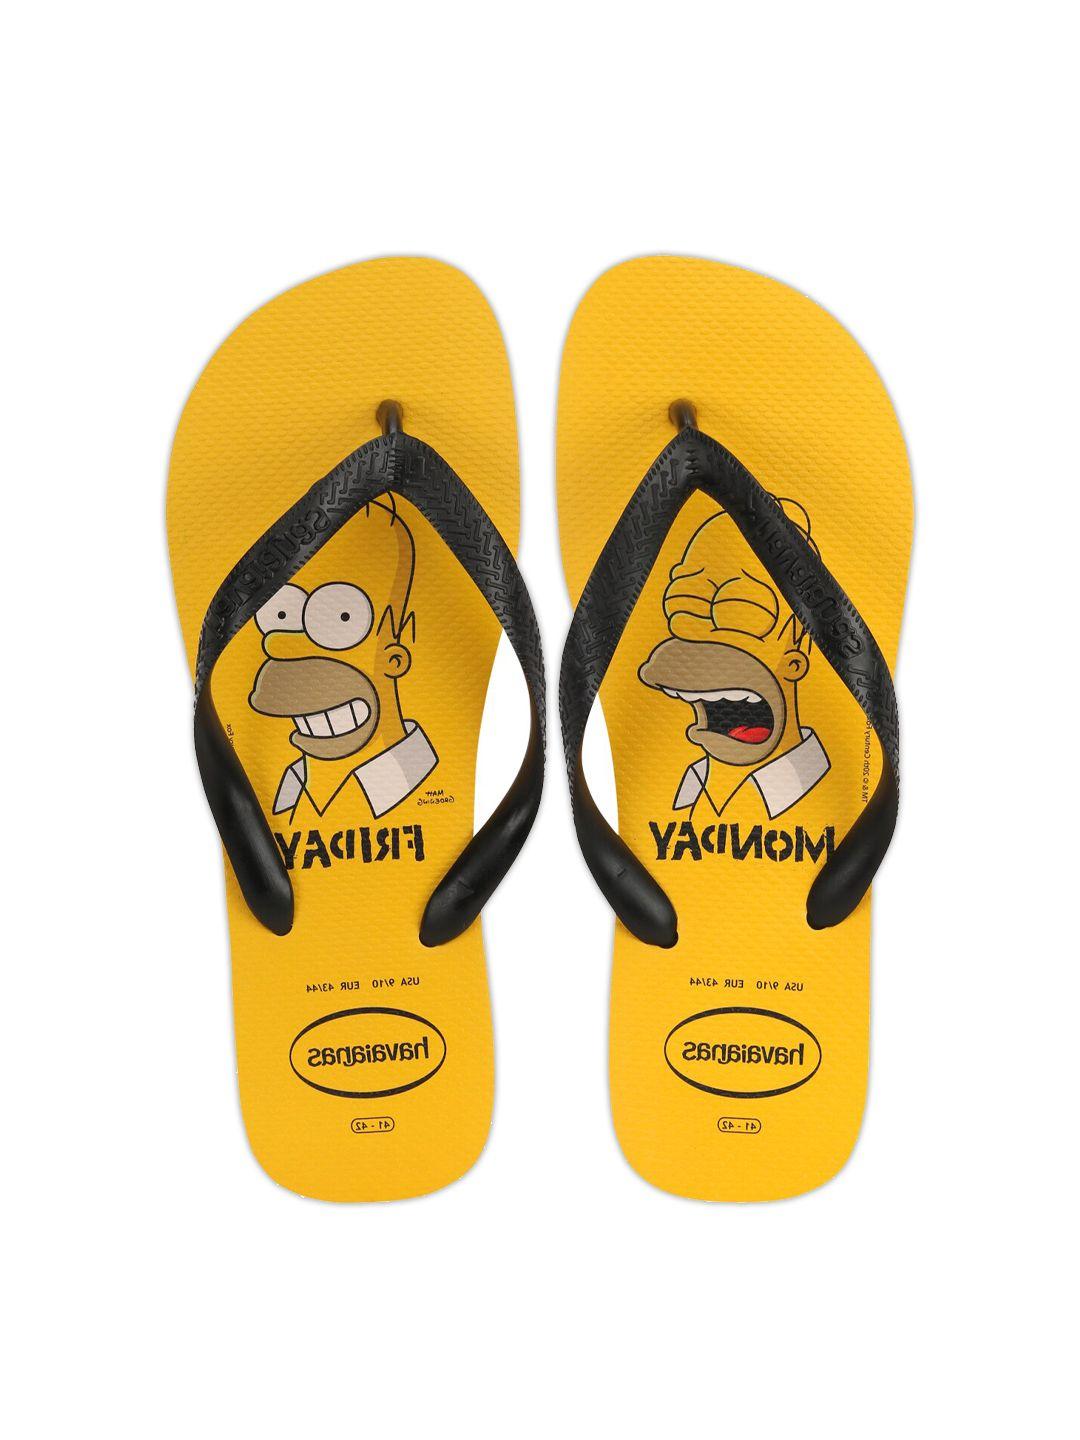 havaianas men yellow & black printed rubber thong flip-flops